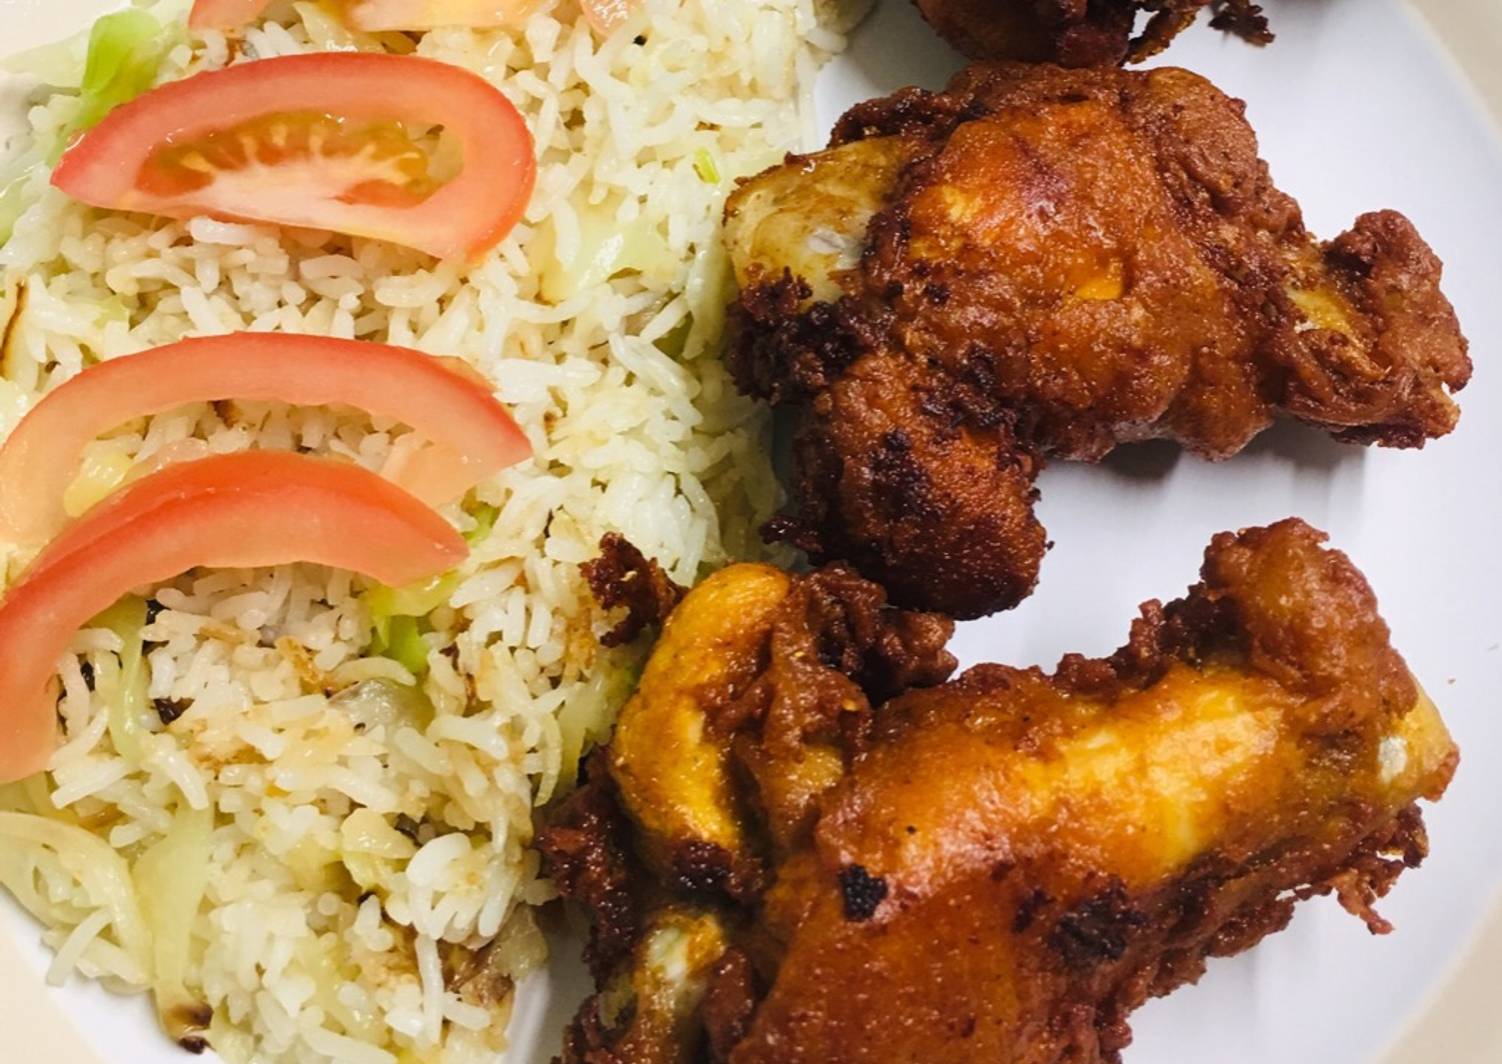 Garlic fried rice with crispy chicken wings Recipe by F.B Cookpad